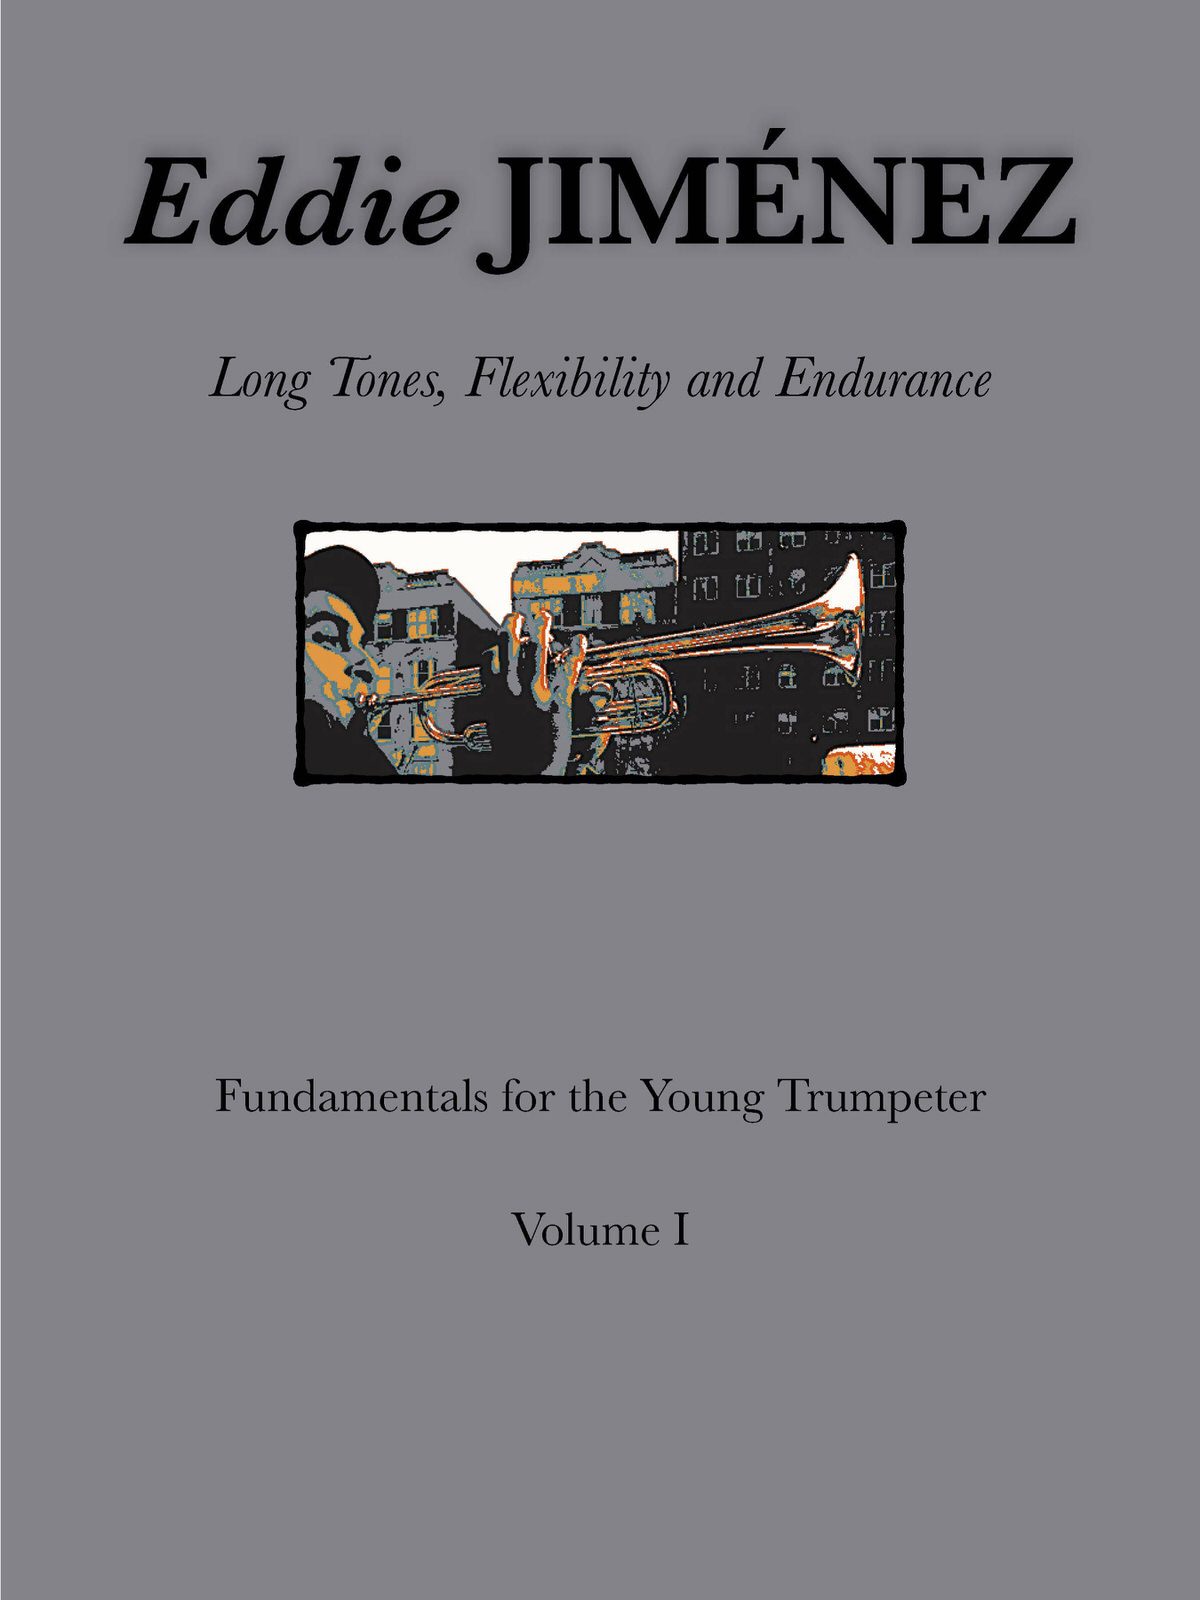 Jimenez, Trumpet Method Vol 1